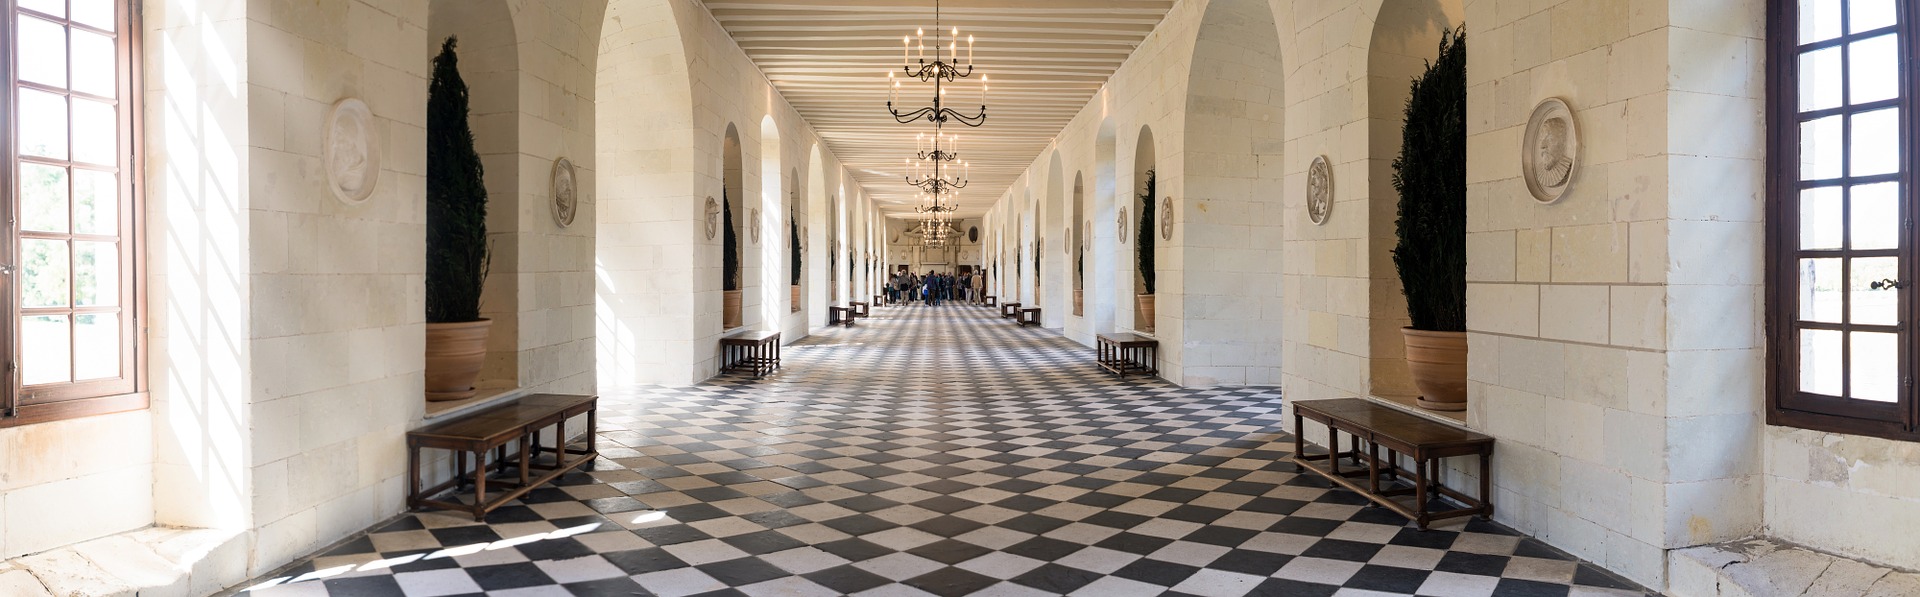 french-chateau-hallway-luxury-travel